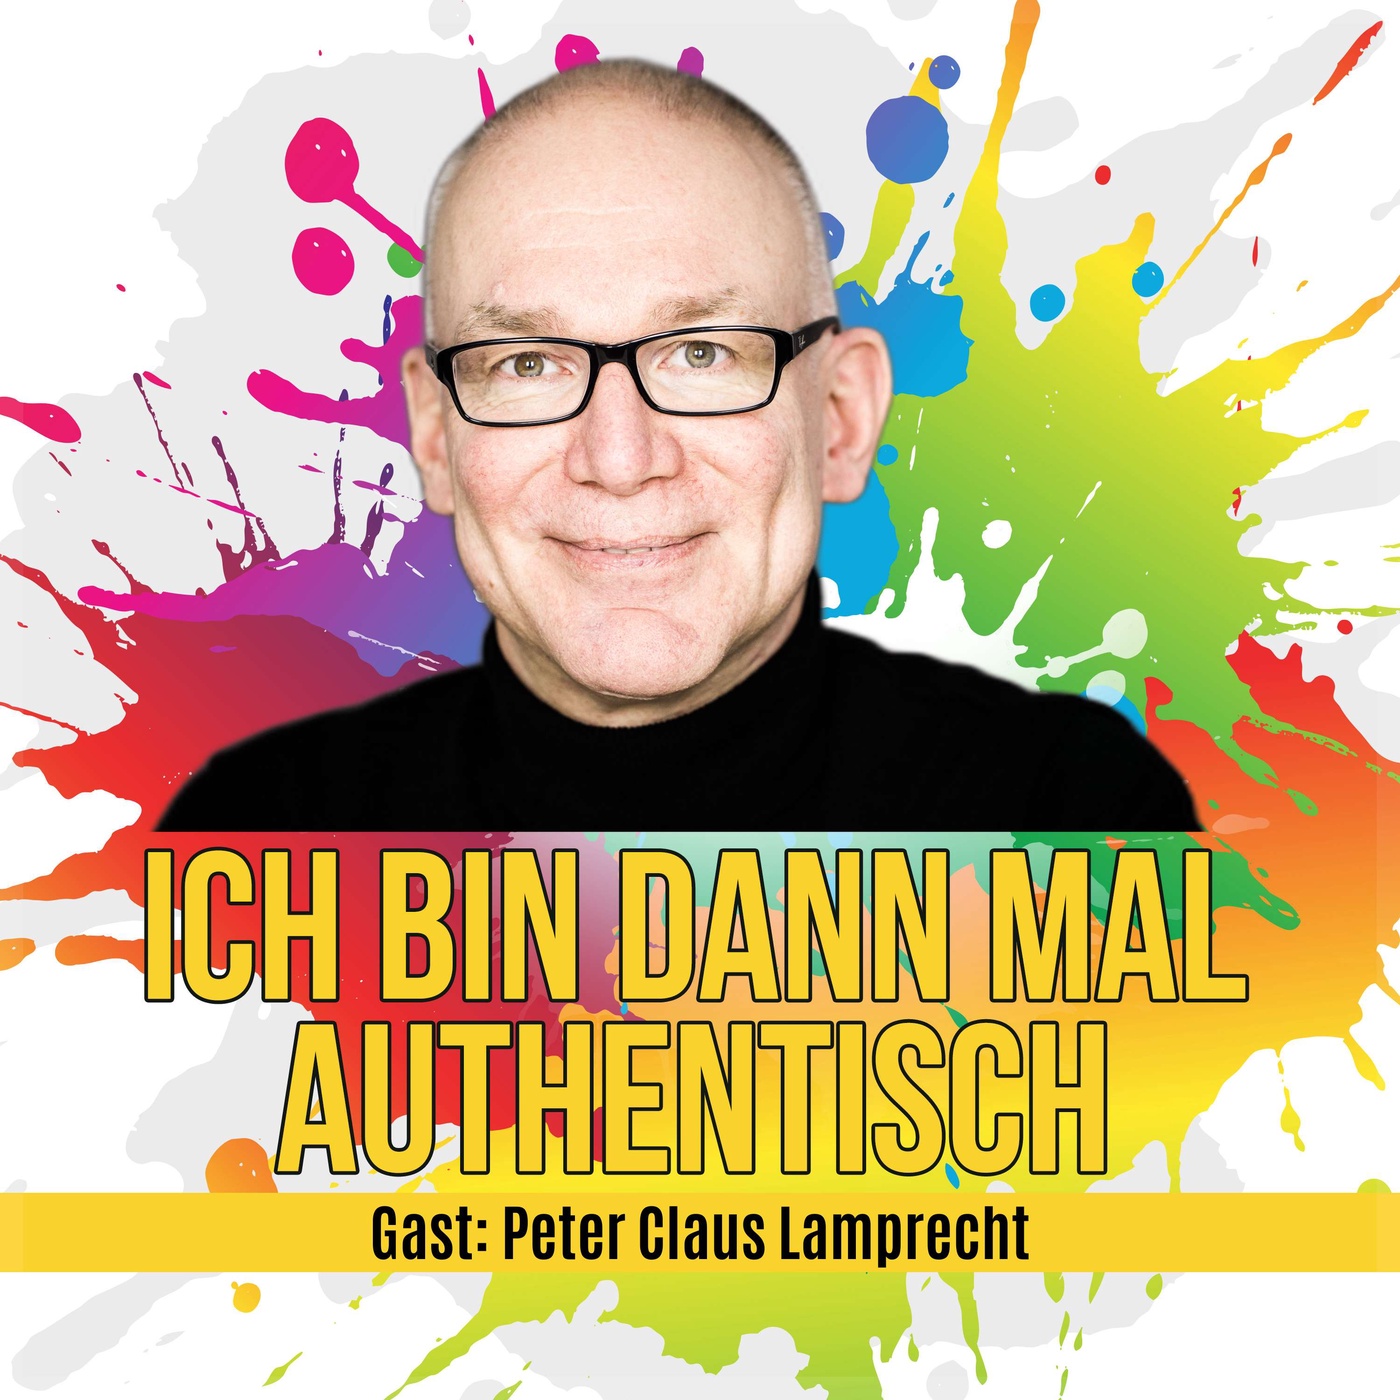 Peter Claus Lamprecht: Starke Präsentation, jedoch ohne langweilige Folien